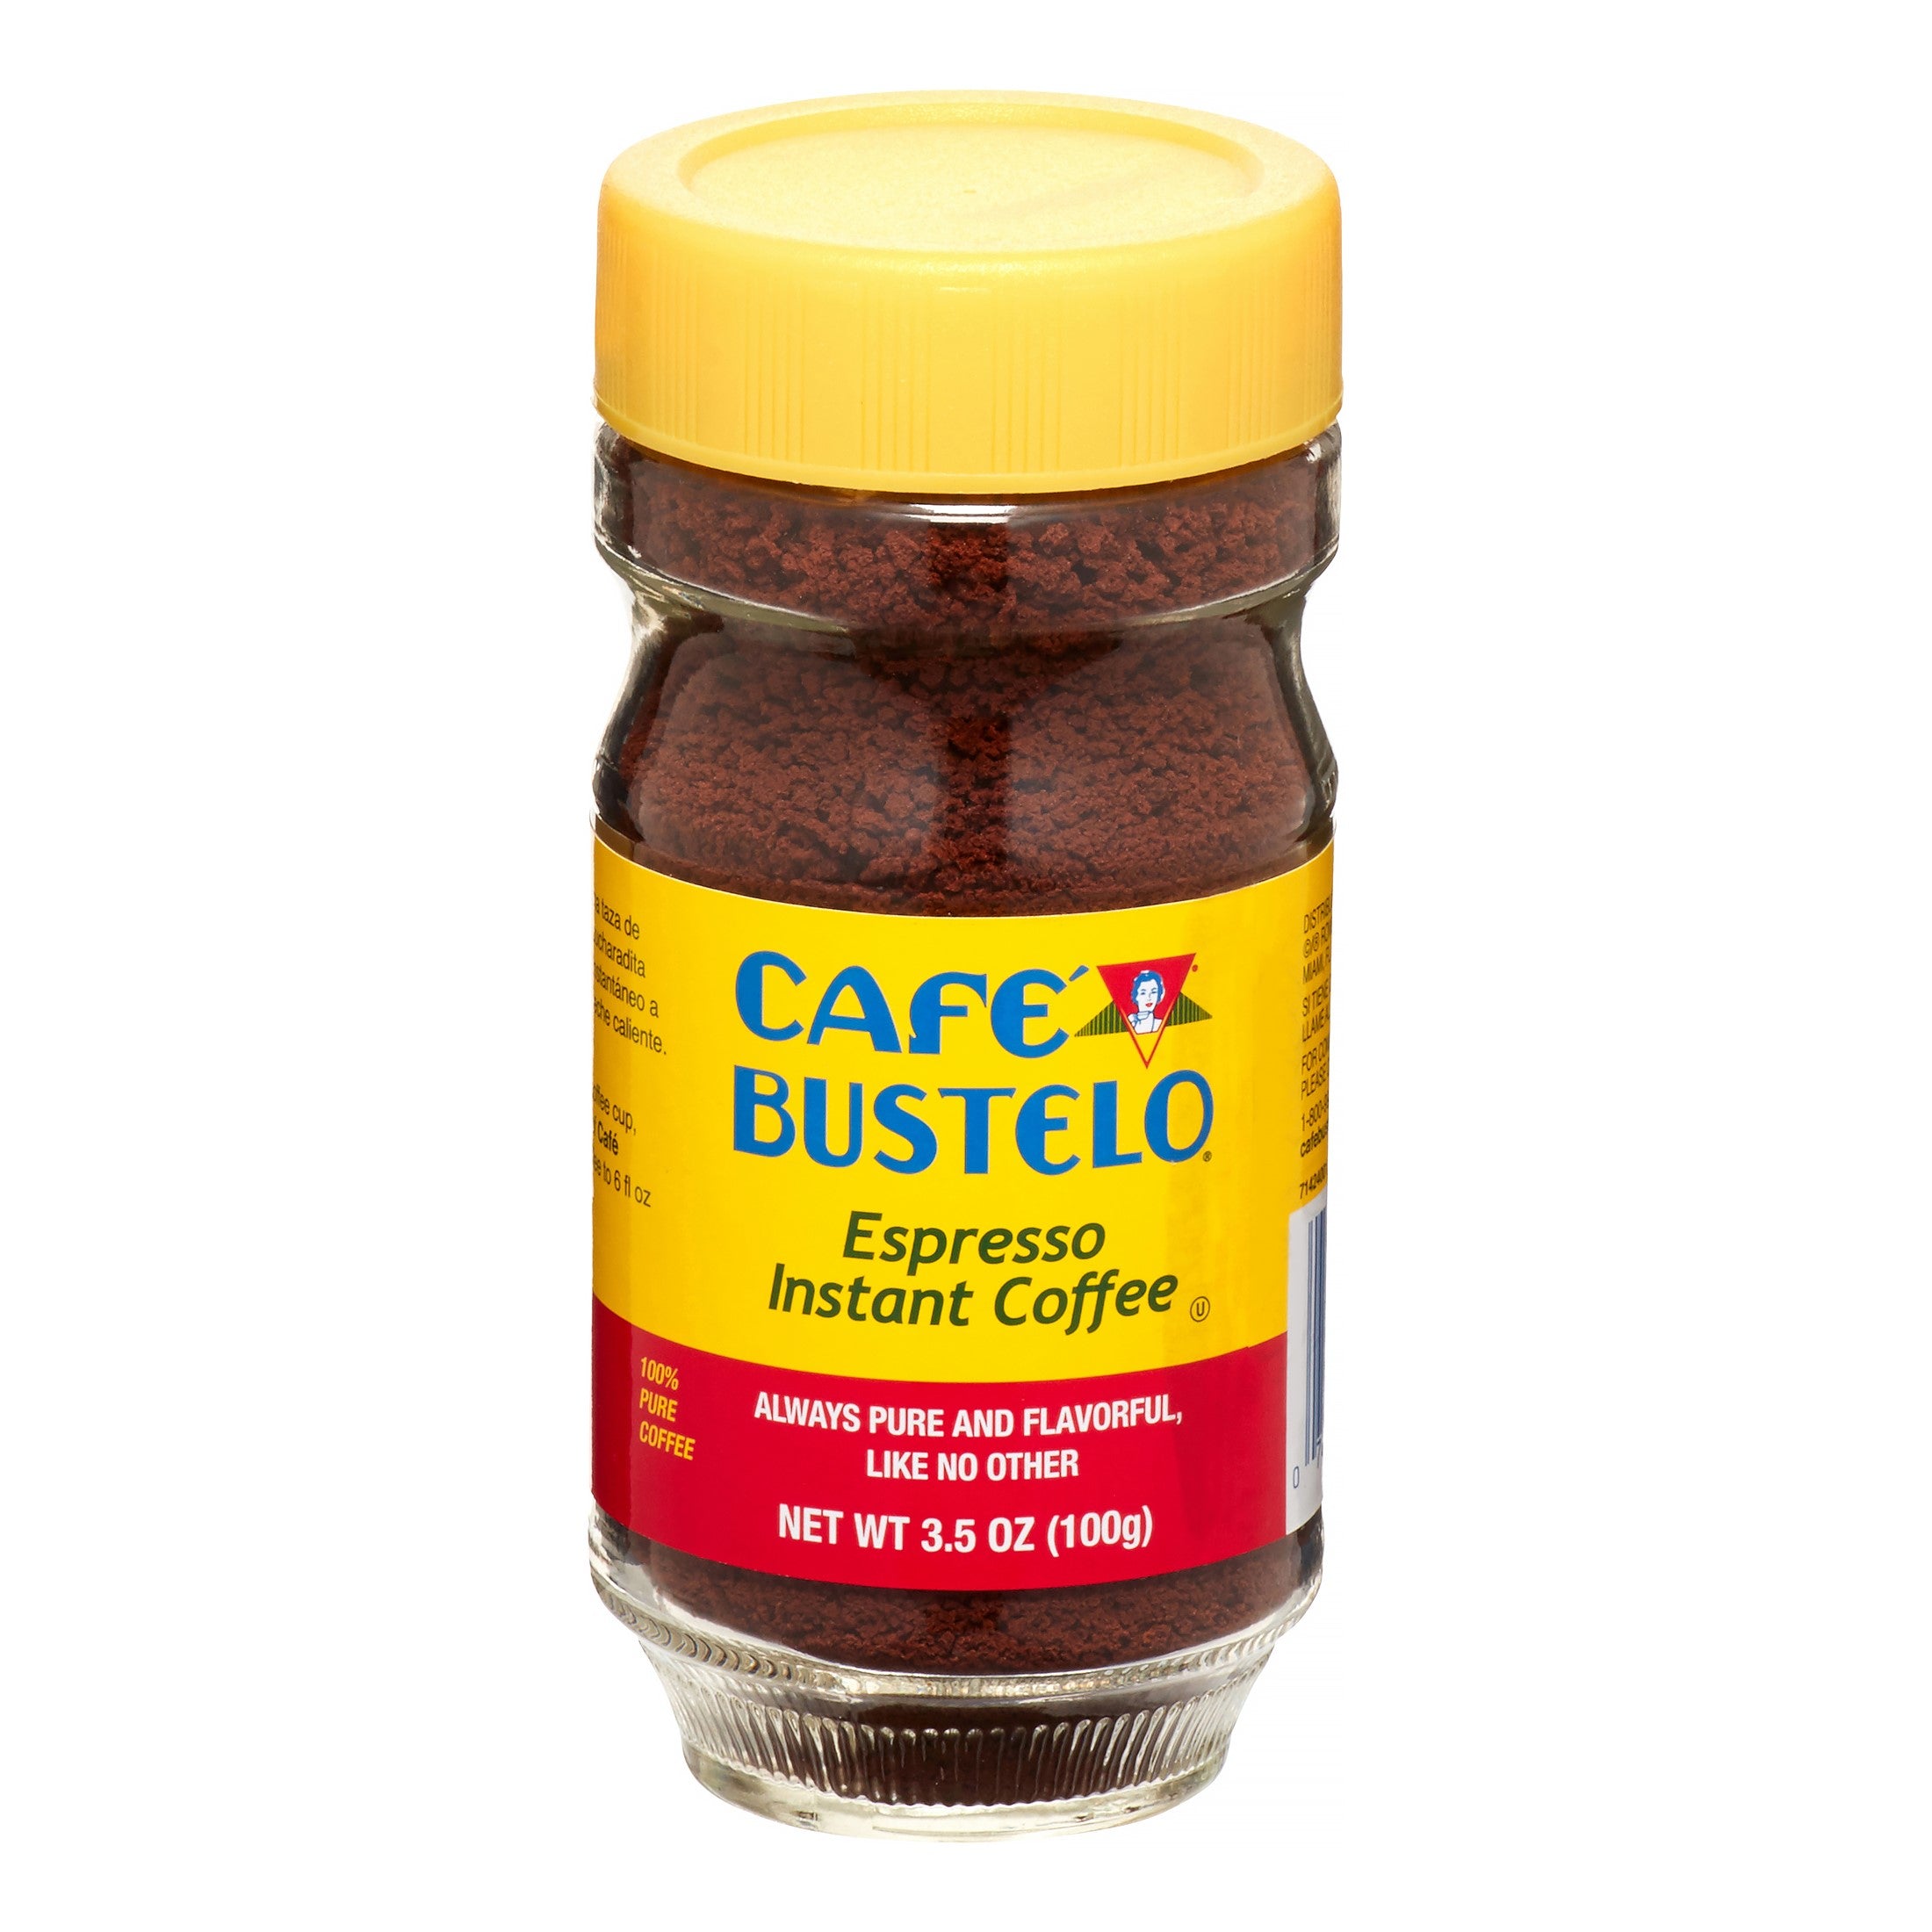 CAFE BUSTELO ESPRESSO INSTANT COFFEE 3.5 OZ